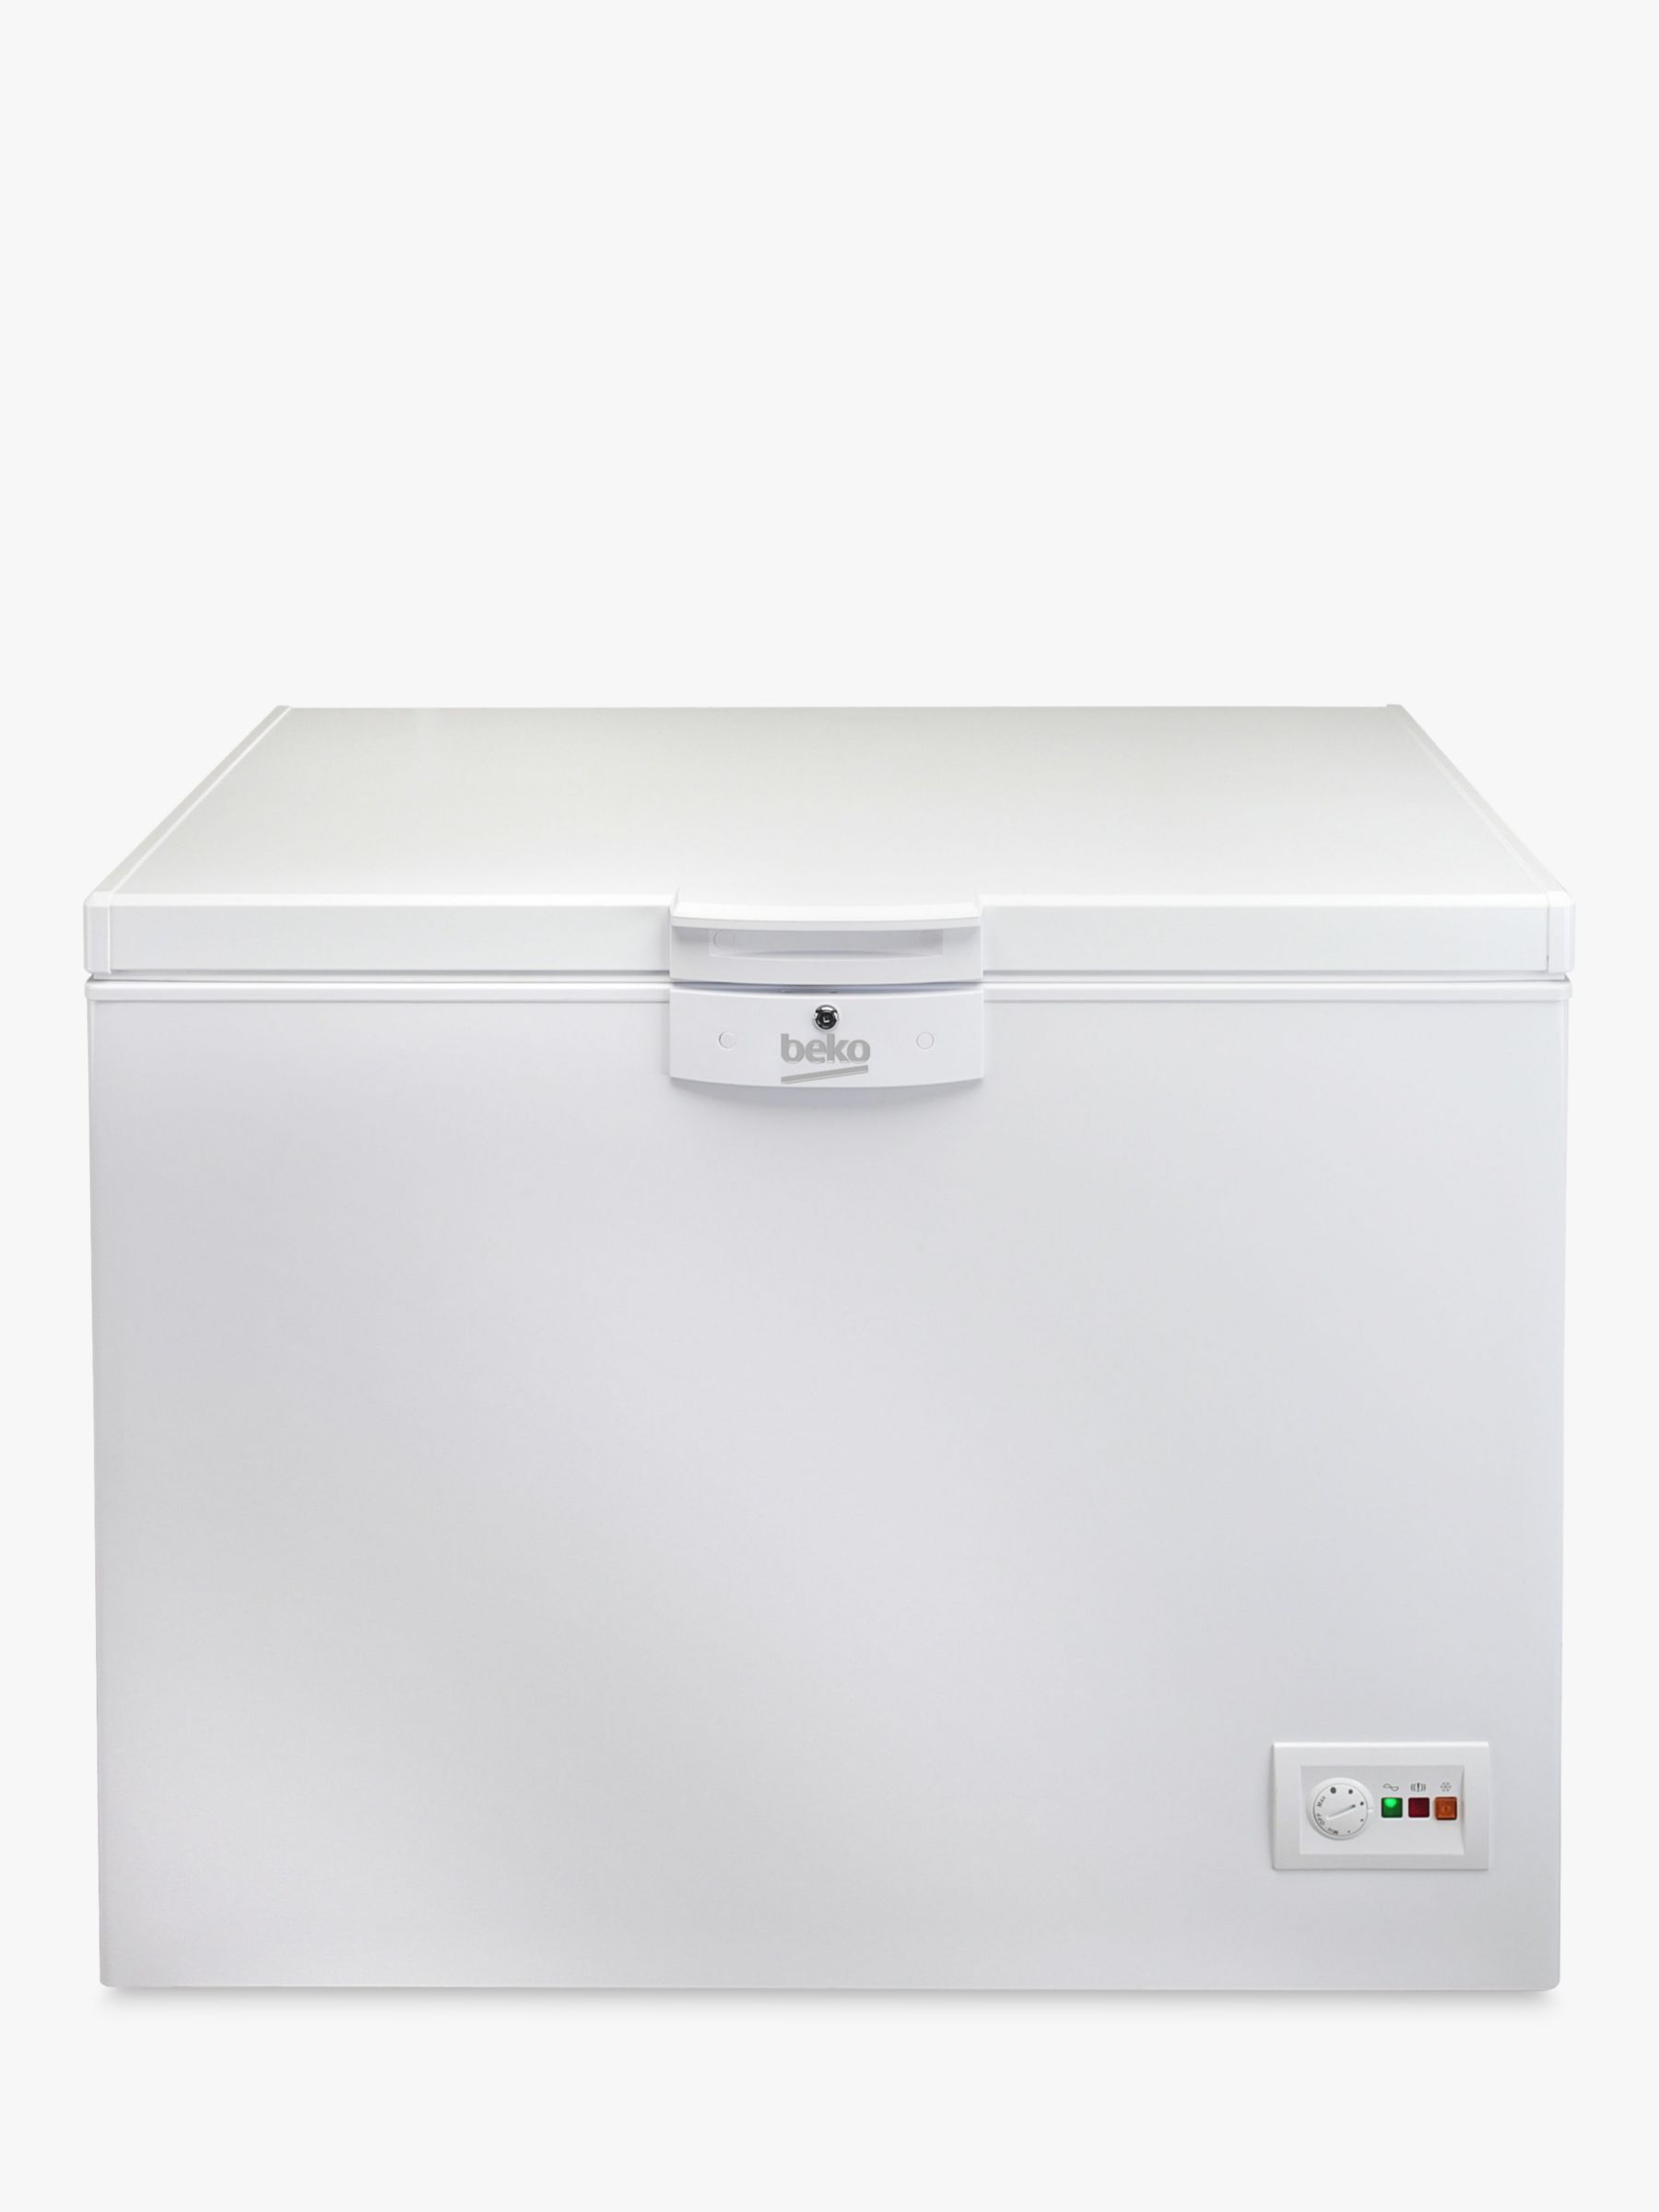 Beko CF1100APW Chest Freezer, A+ Energy Rating, 110cm Wide, White